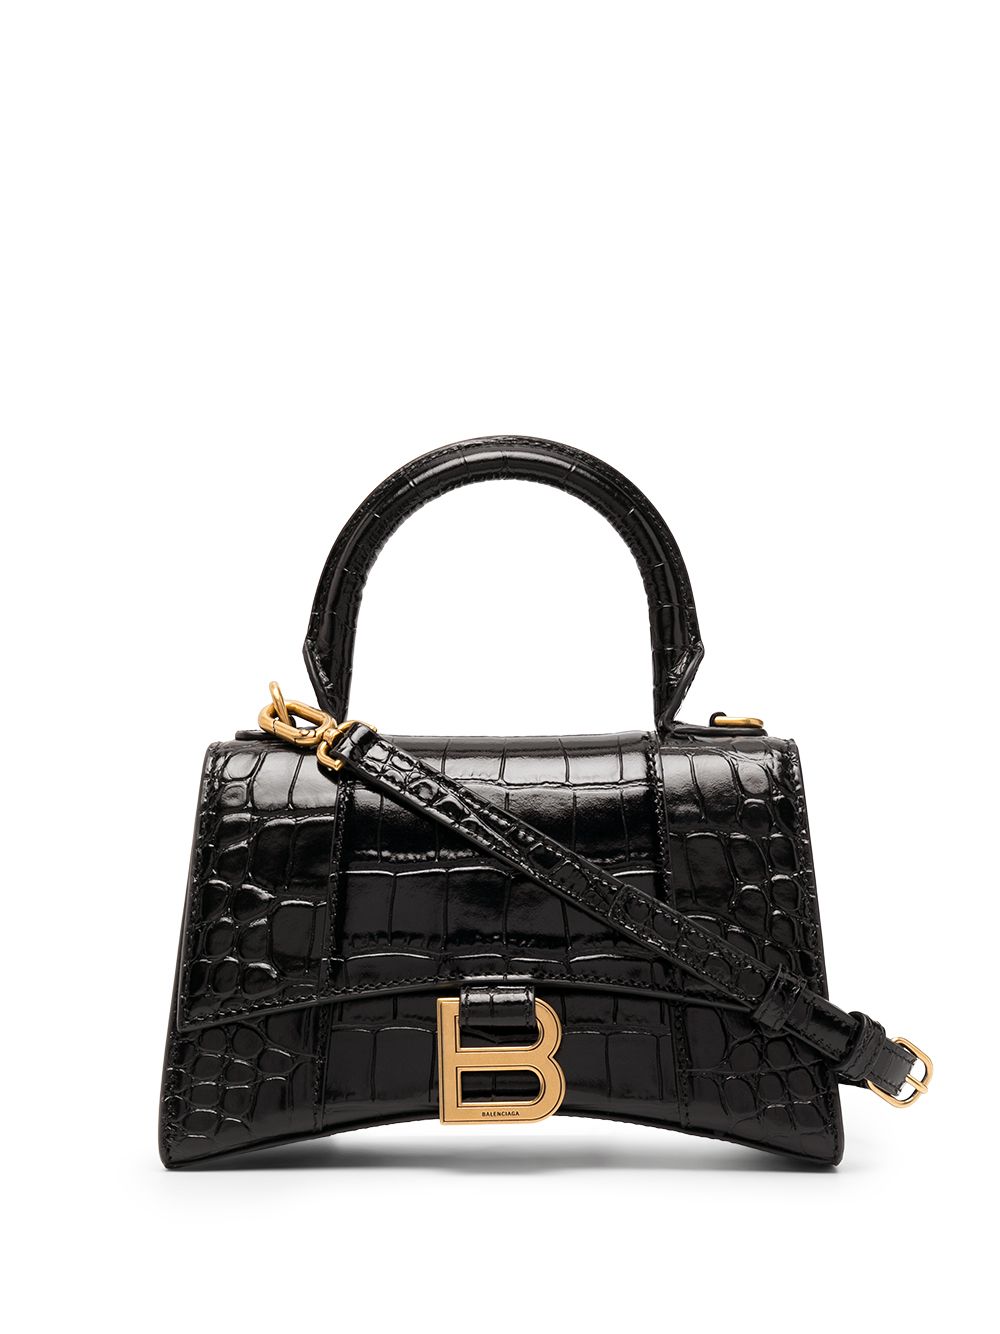 Beige Hourglass S crocodile-effect leather bag, Balenciaga